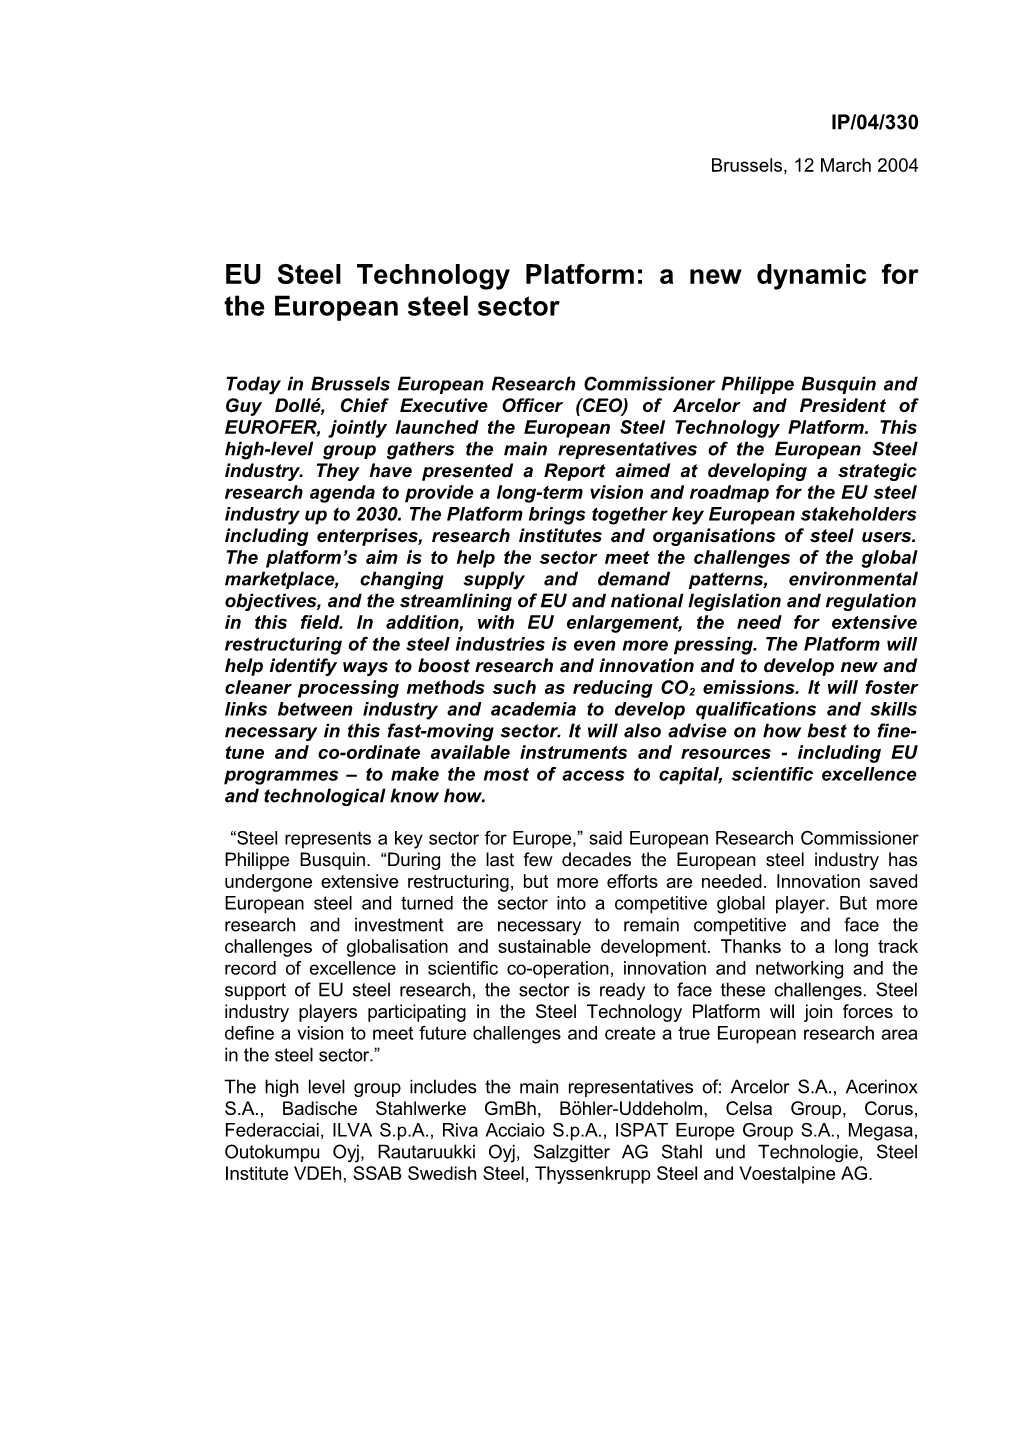 EU Steel Technology Platform: a New Dynamic for the European Steel Sector